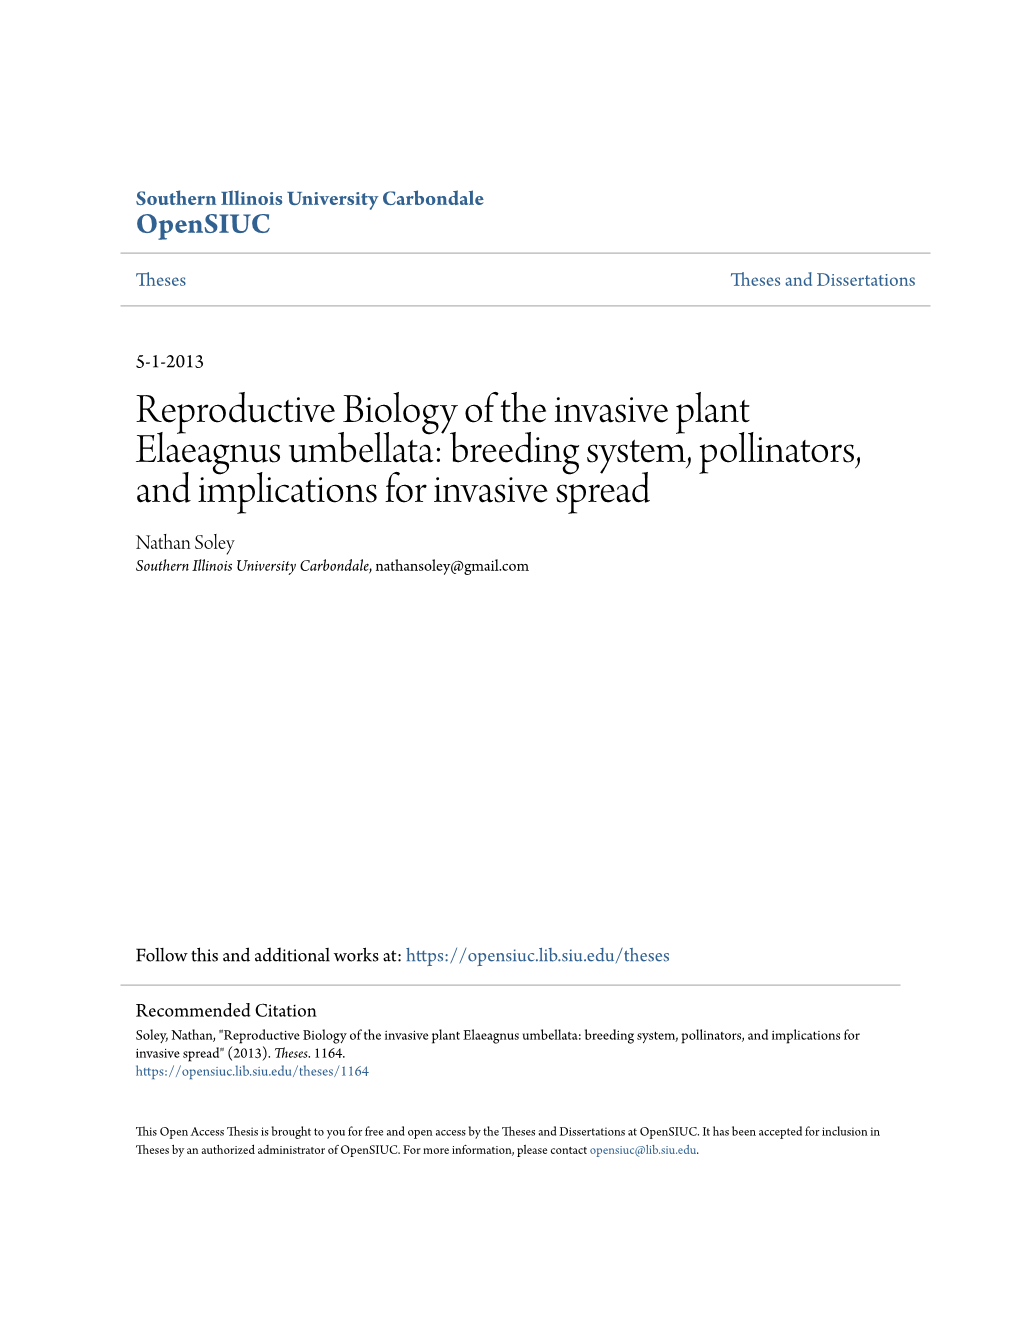 Reproductive Biology of the Invasive Plant Elaeagnus